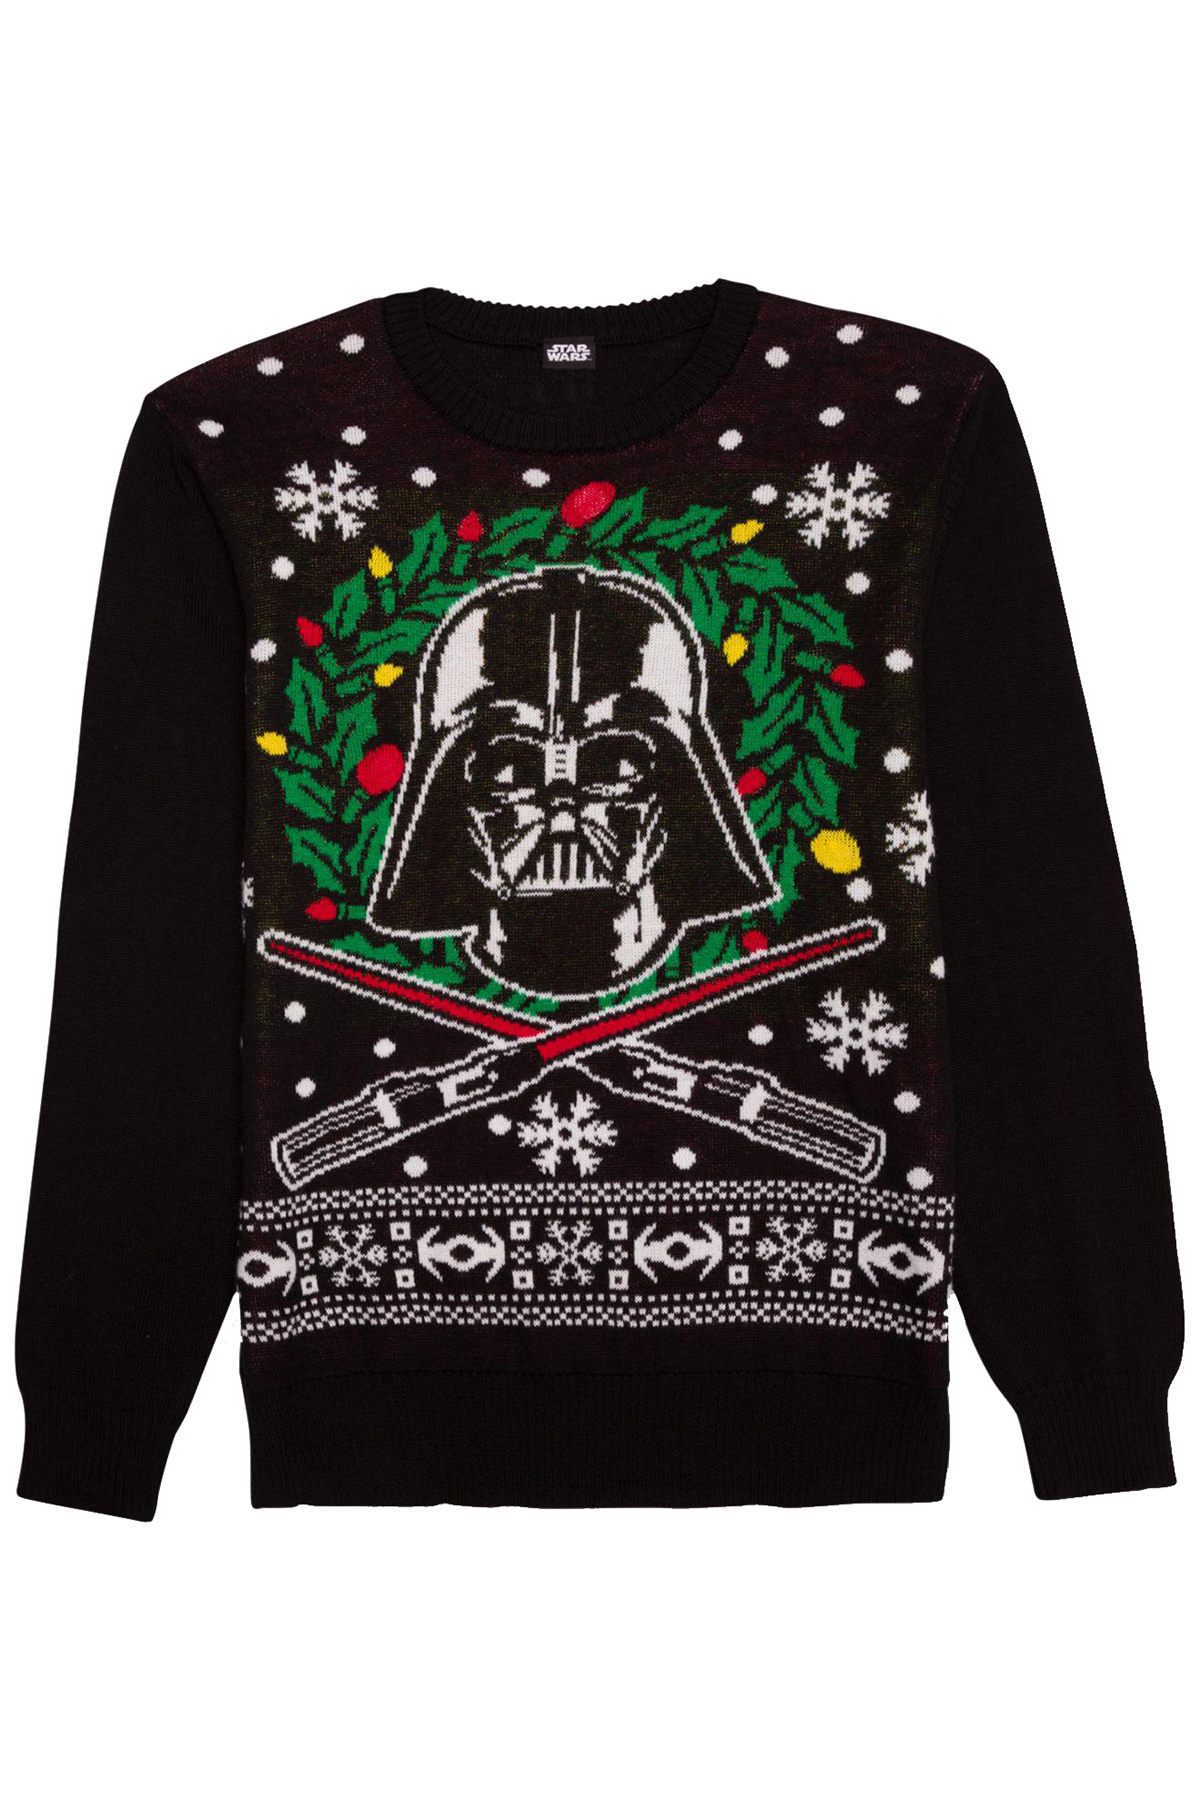 Hybrid Apparel Black Light-Up Star-Wars Holiday Sweater